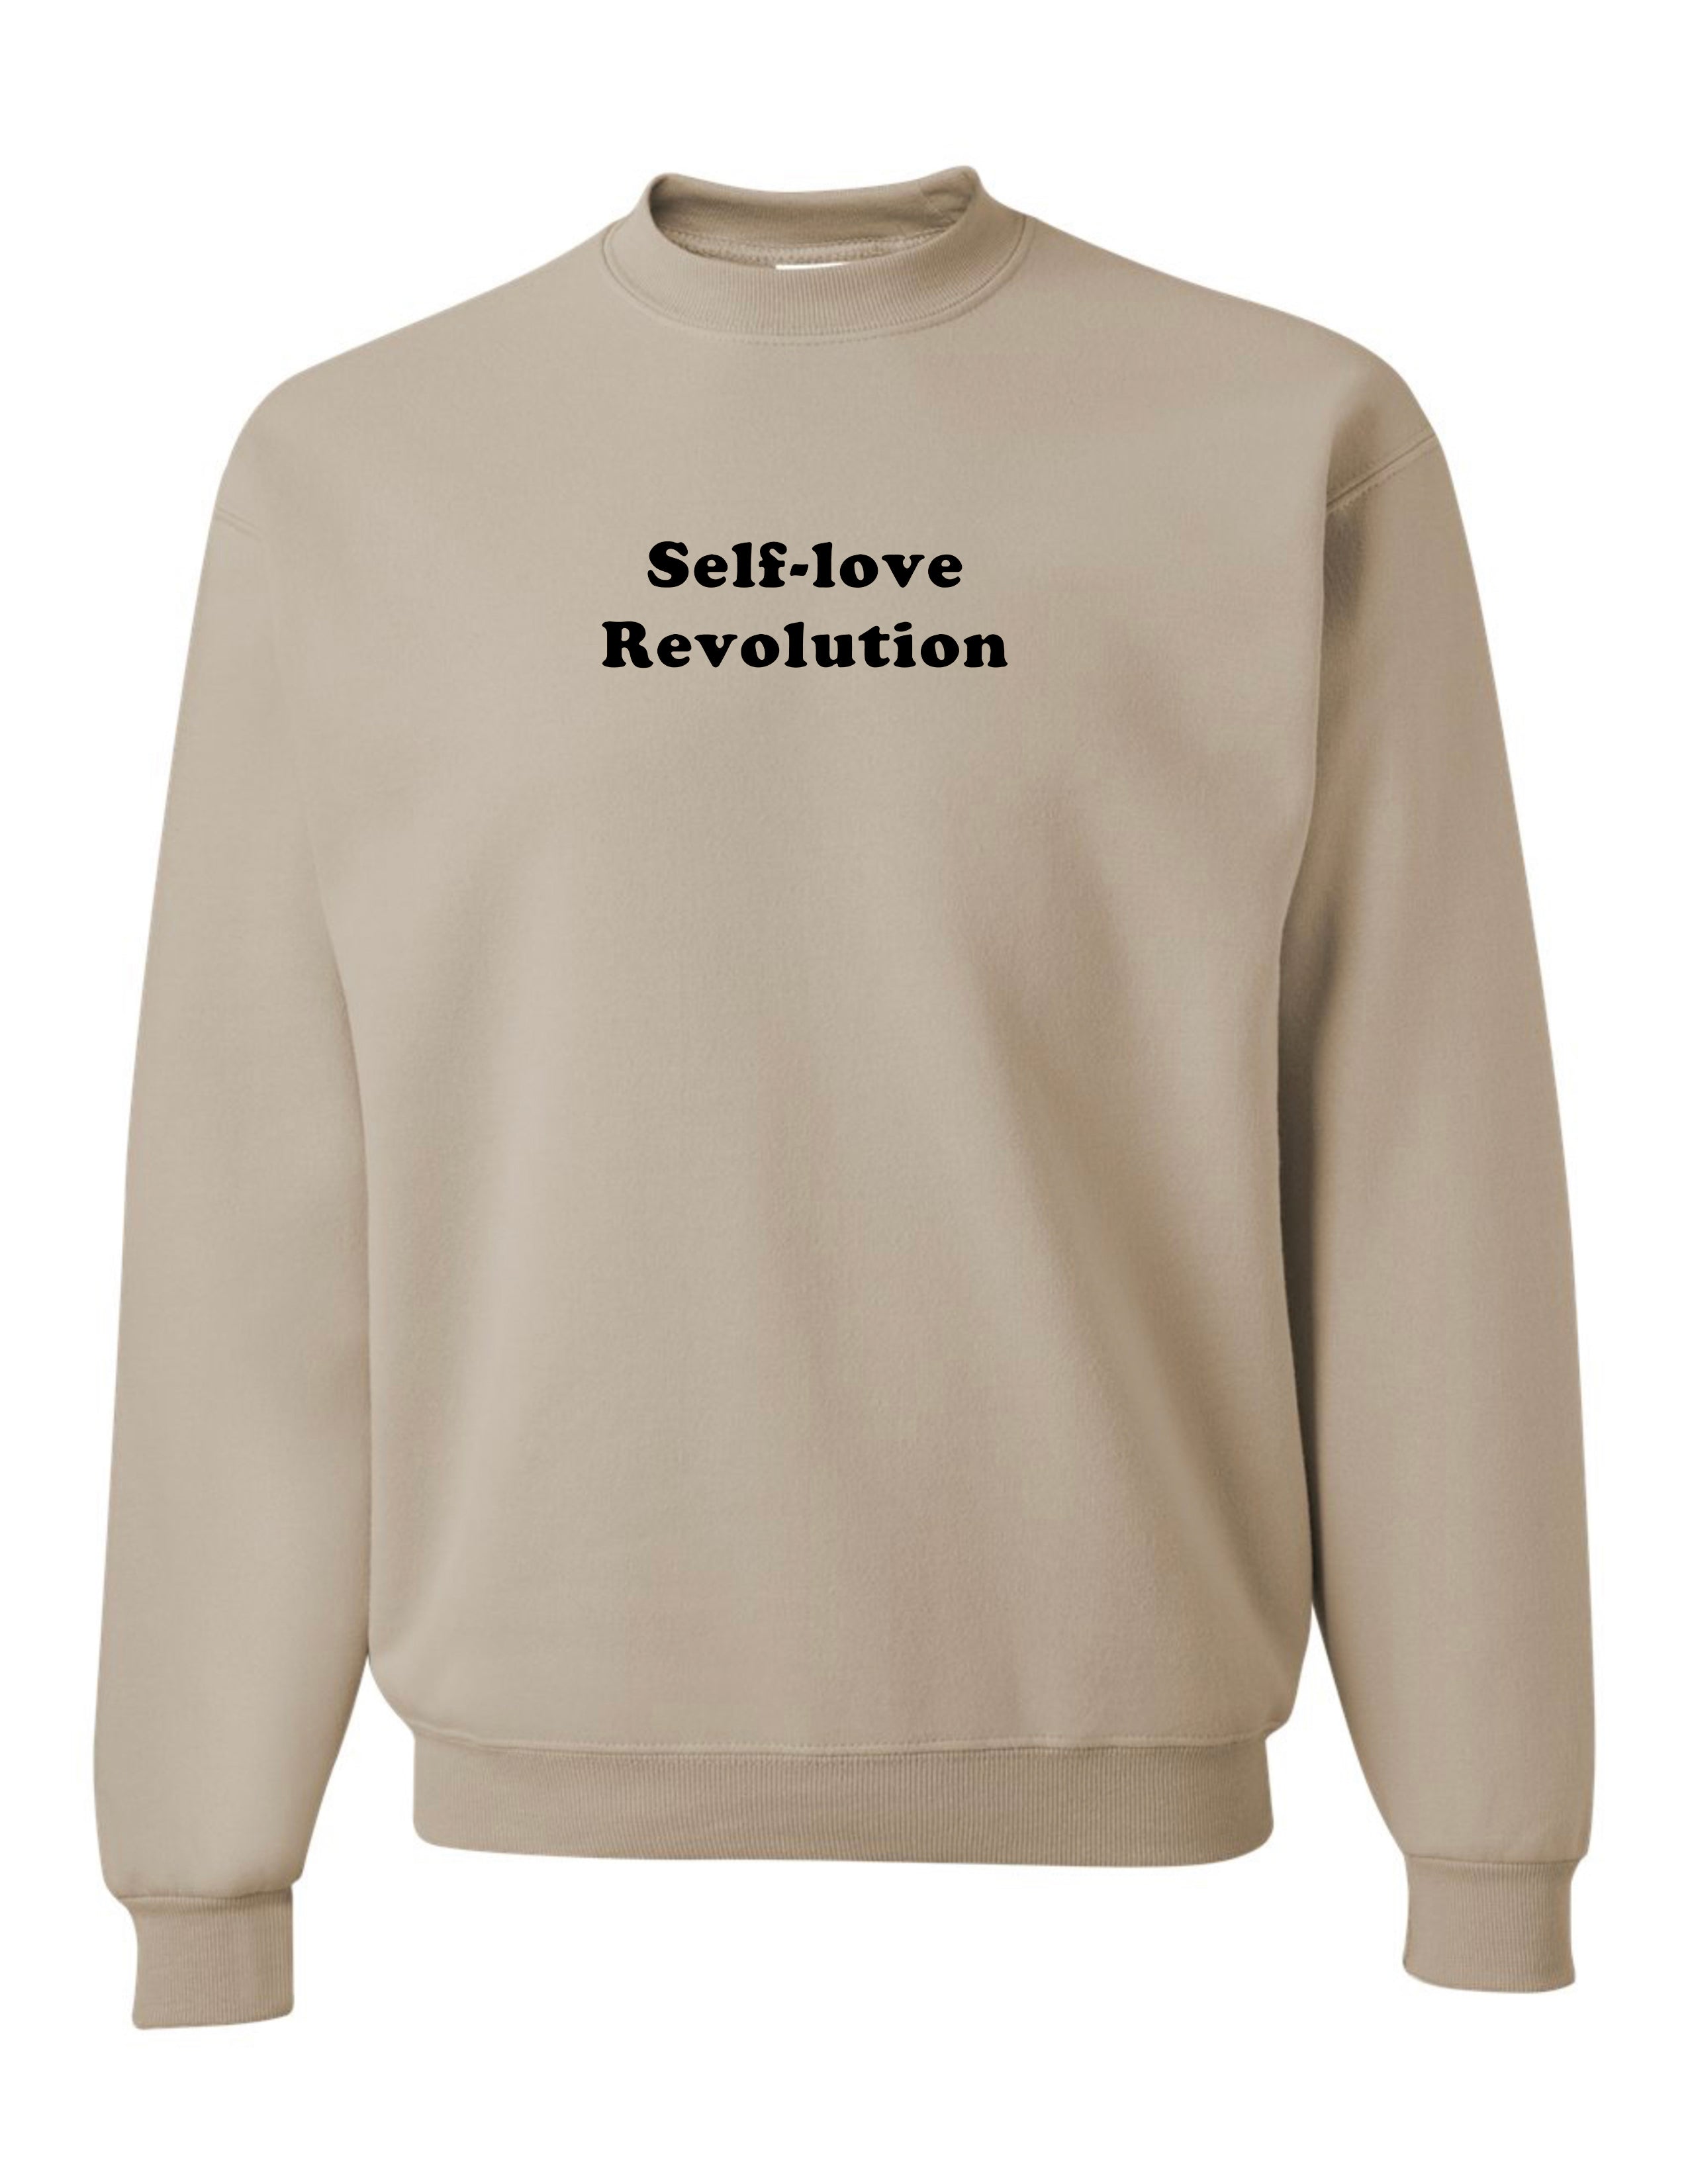 Self-love Revolution Sweatshirt